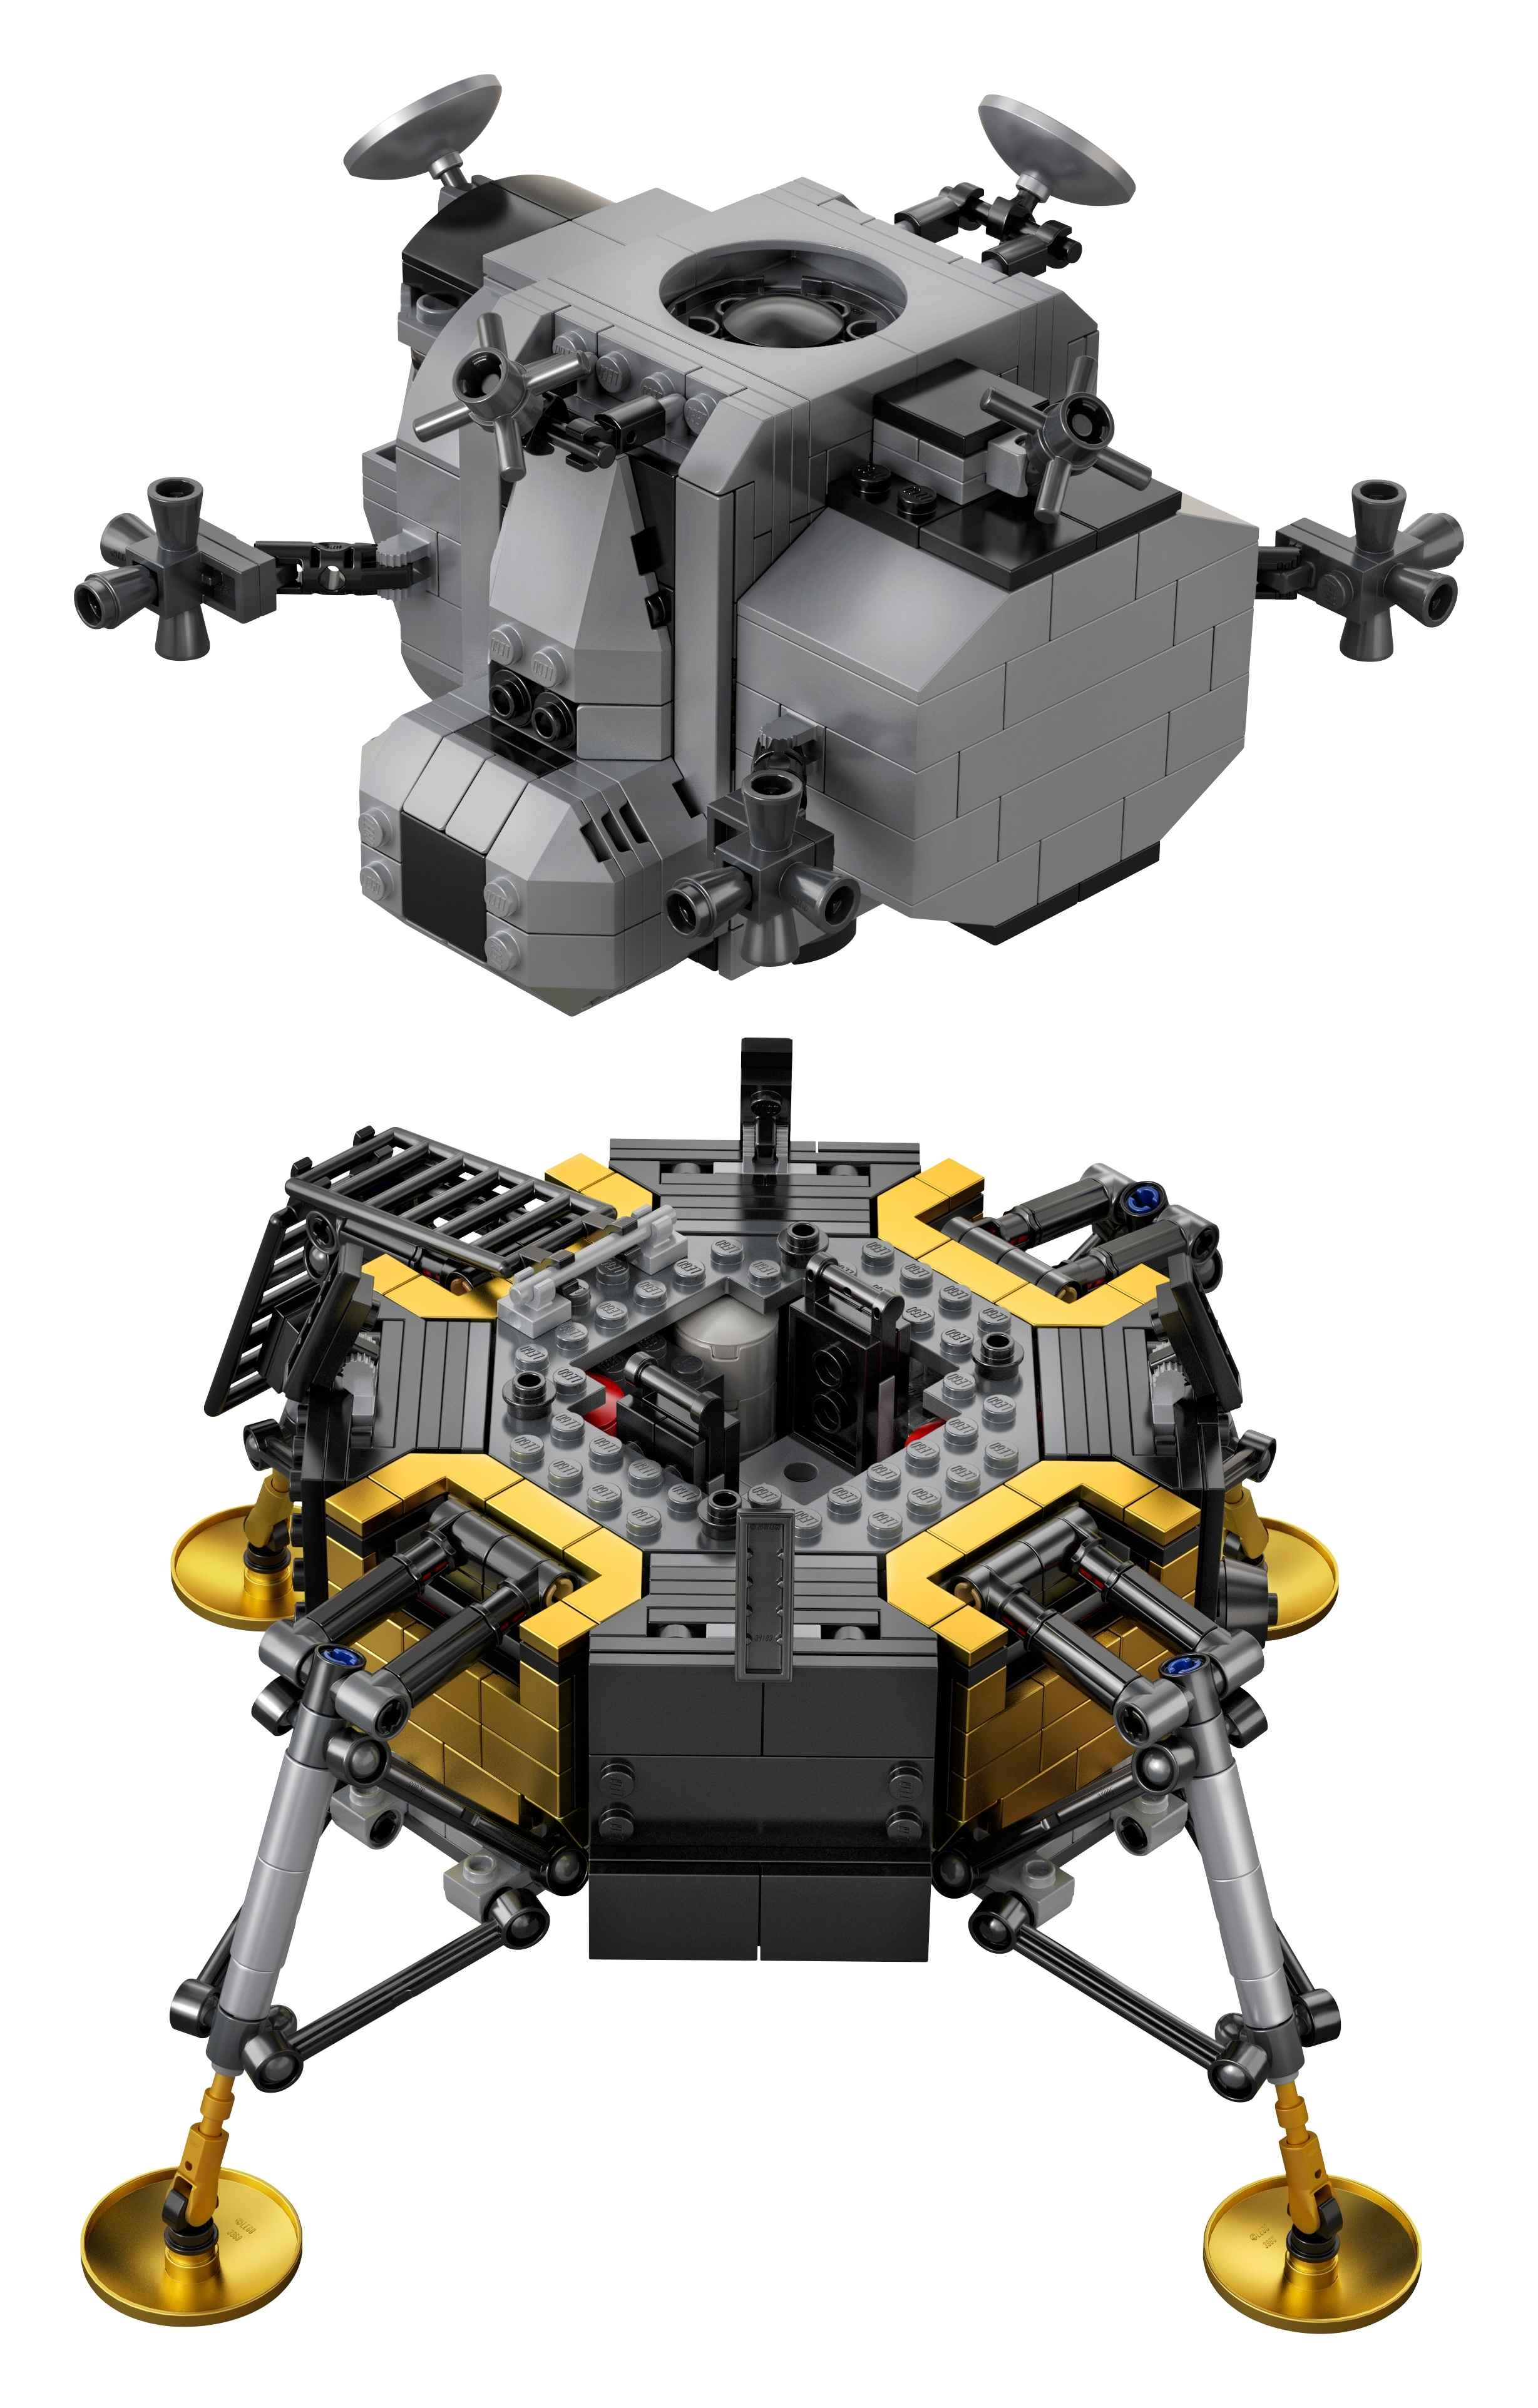 LEGO Patch 5005907 Aufnäher zu 10266 NASA Apollo 11 Mondlandefähre 